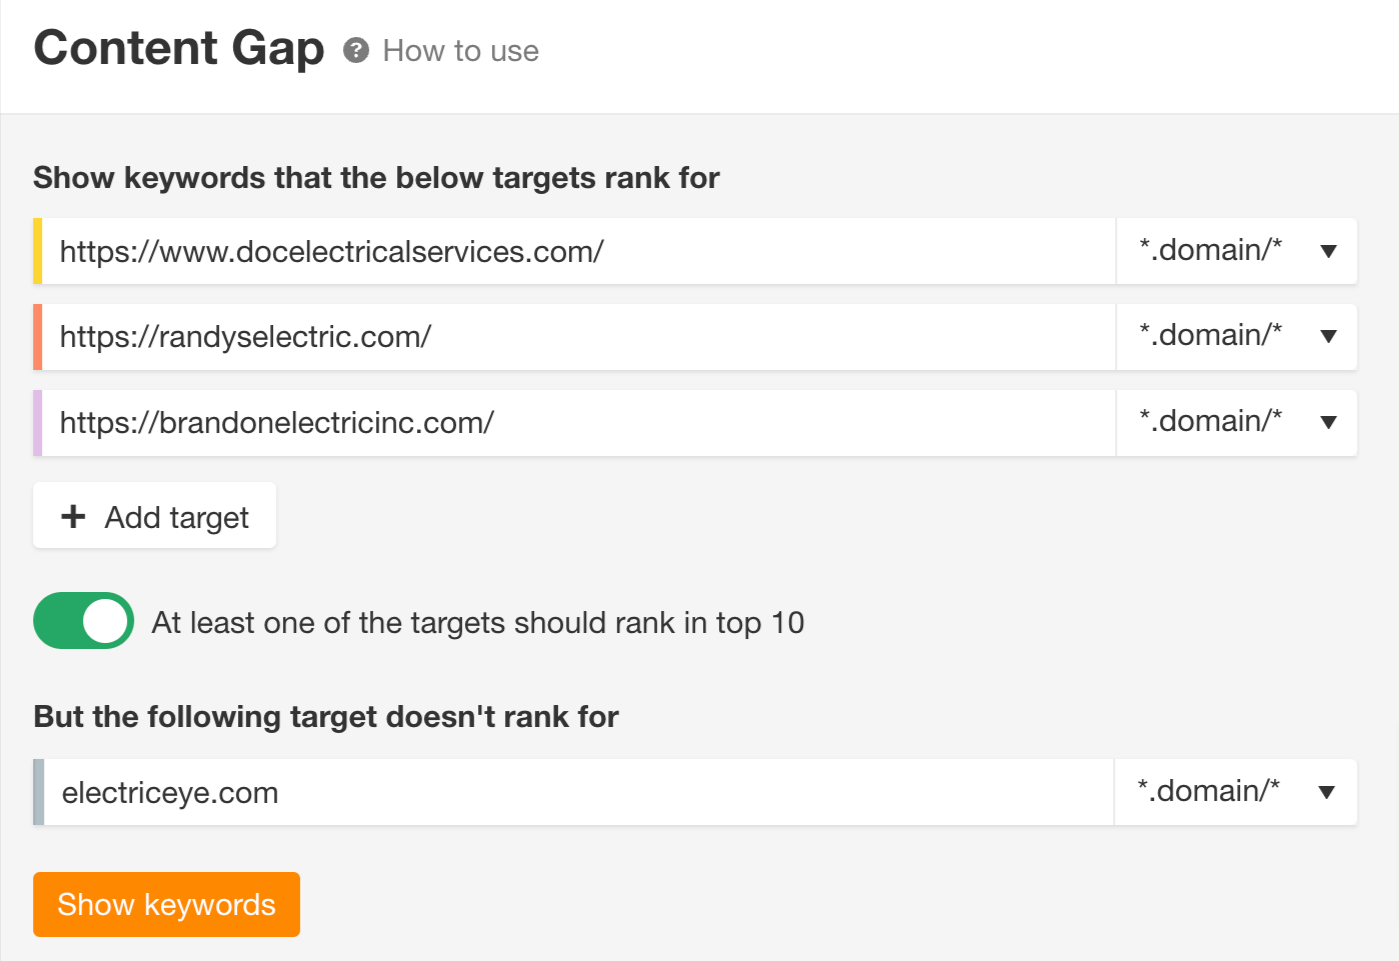 Content Gap tool